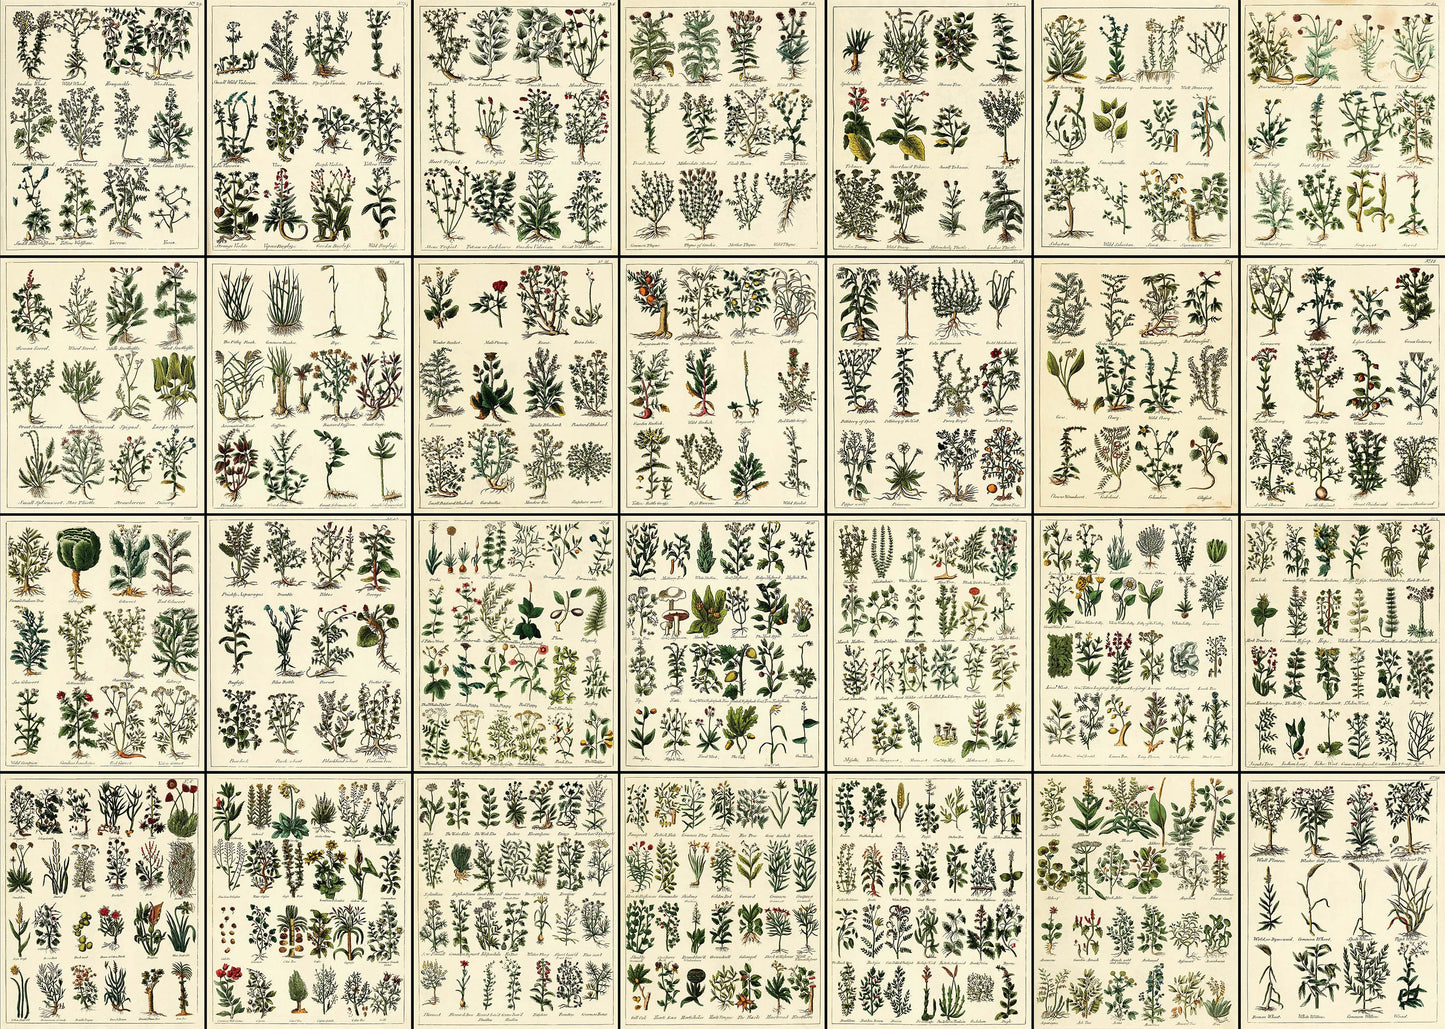 Culpeper's Complete Herbal [28 Images]